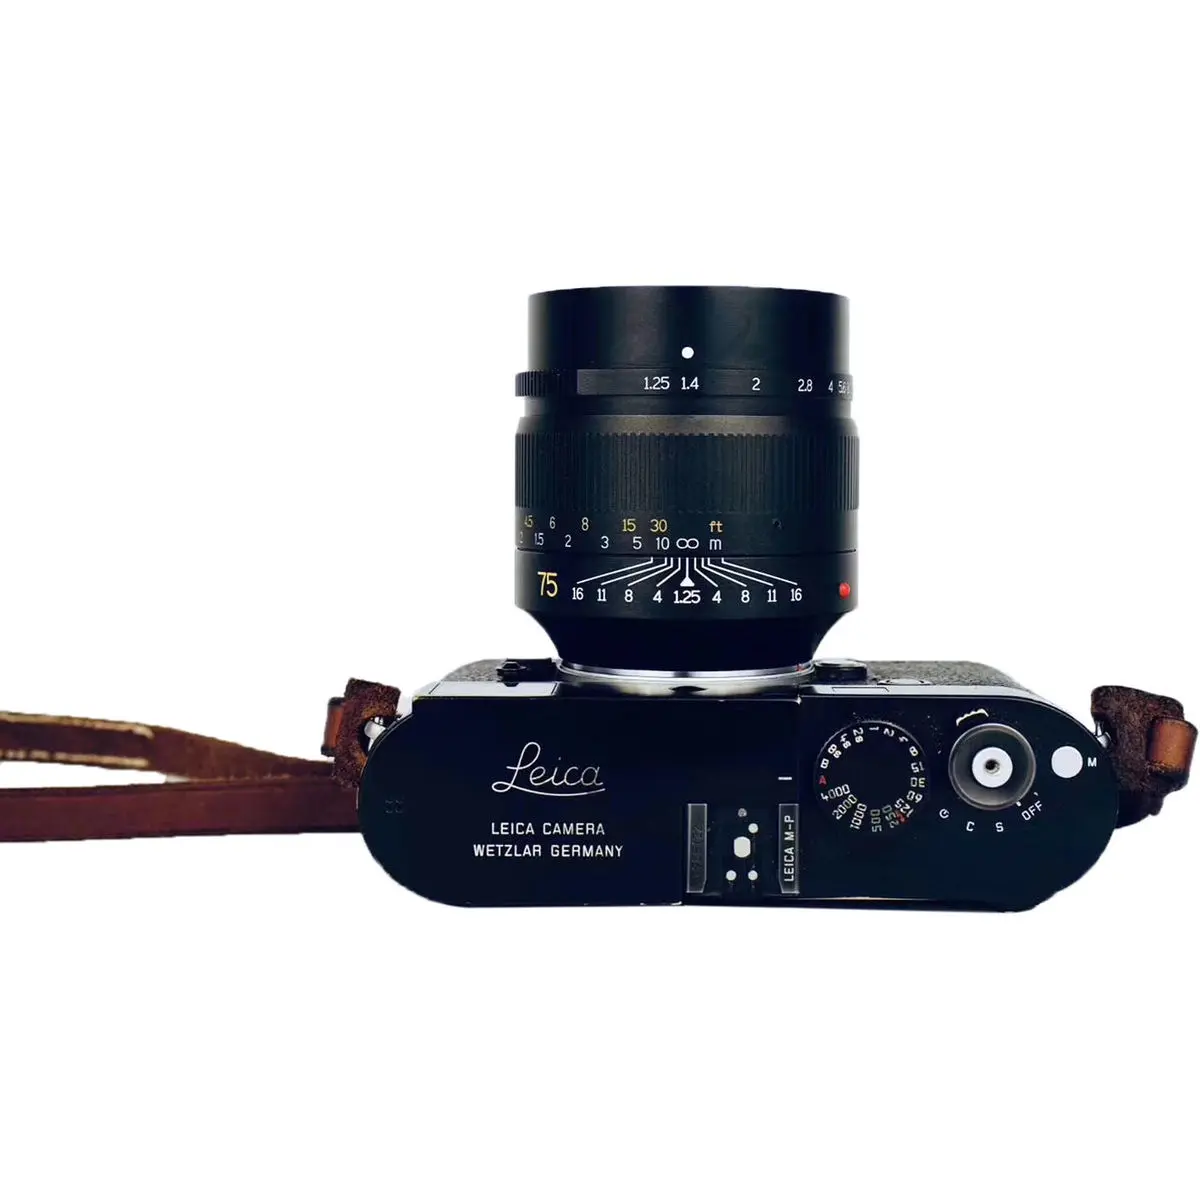 6. 7Artisans 75mm F1.25 (Leica M) Black (A113B) Lens